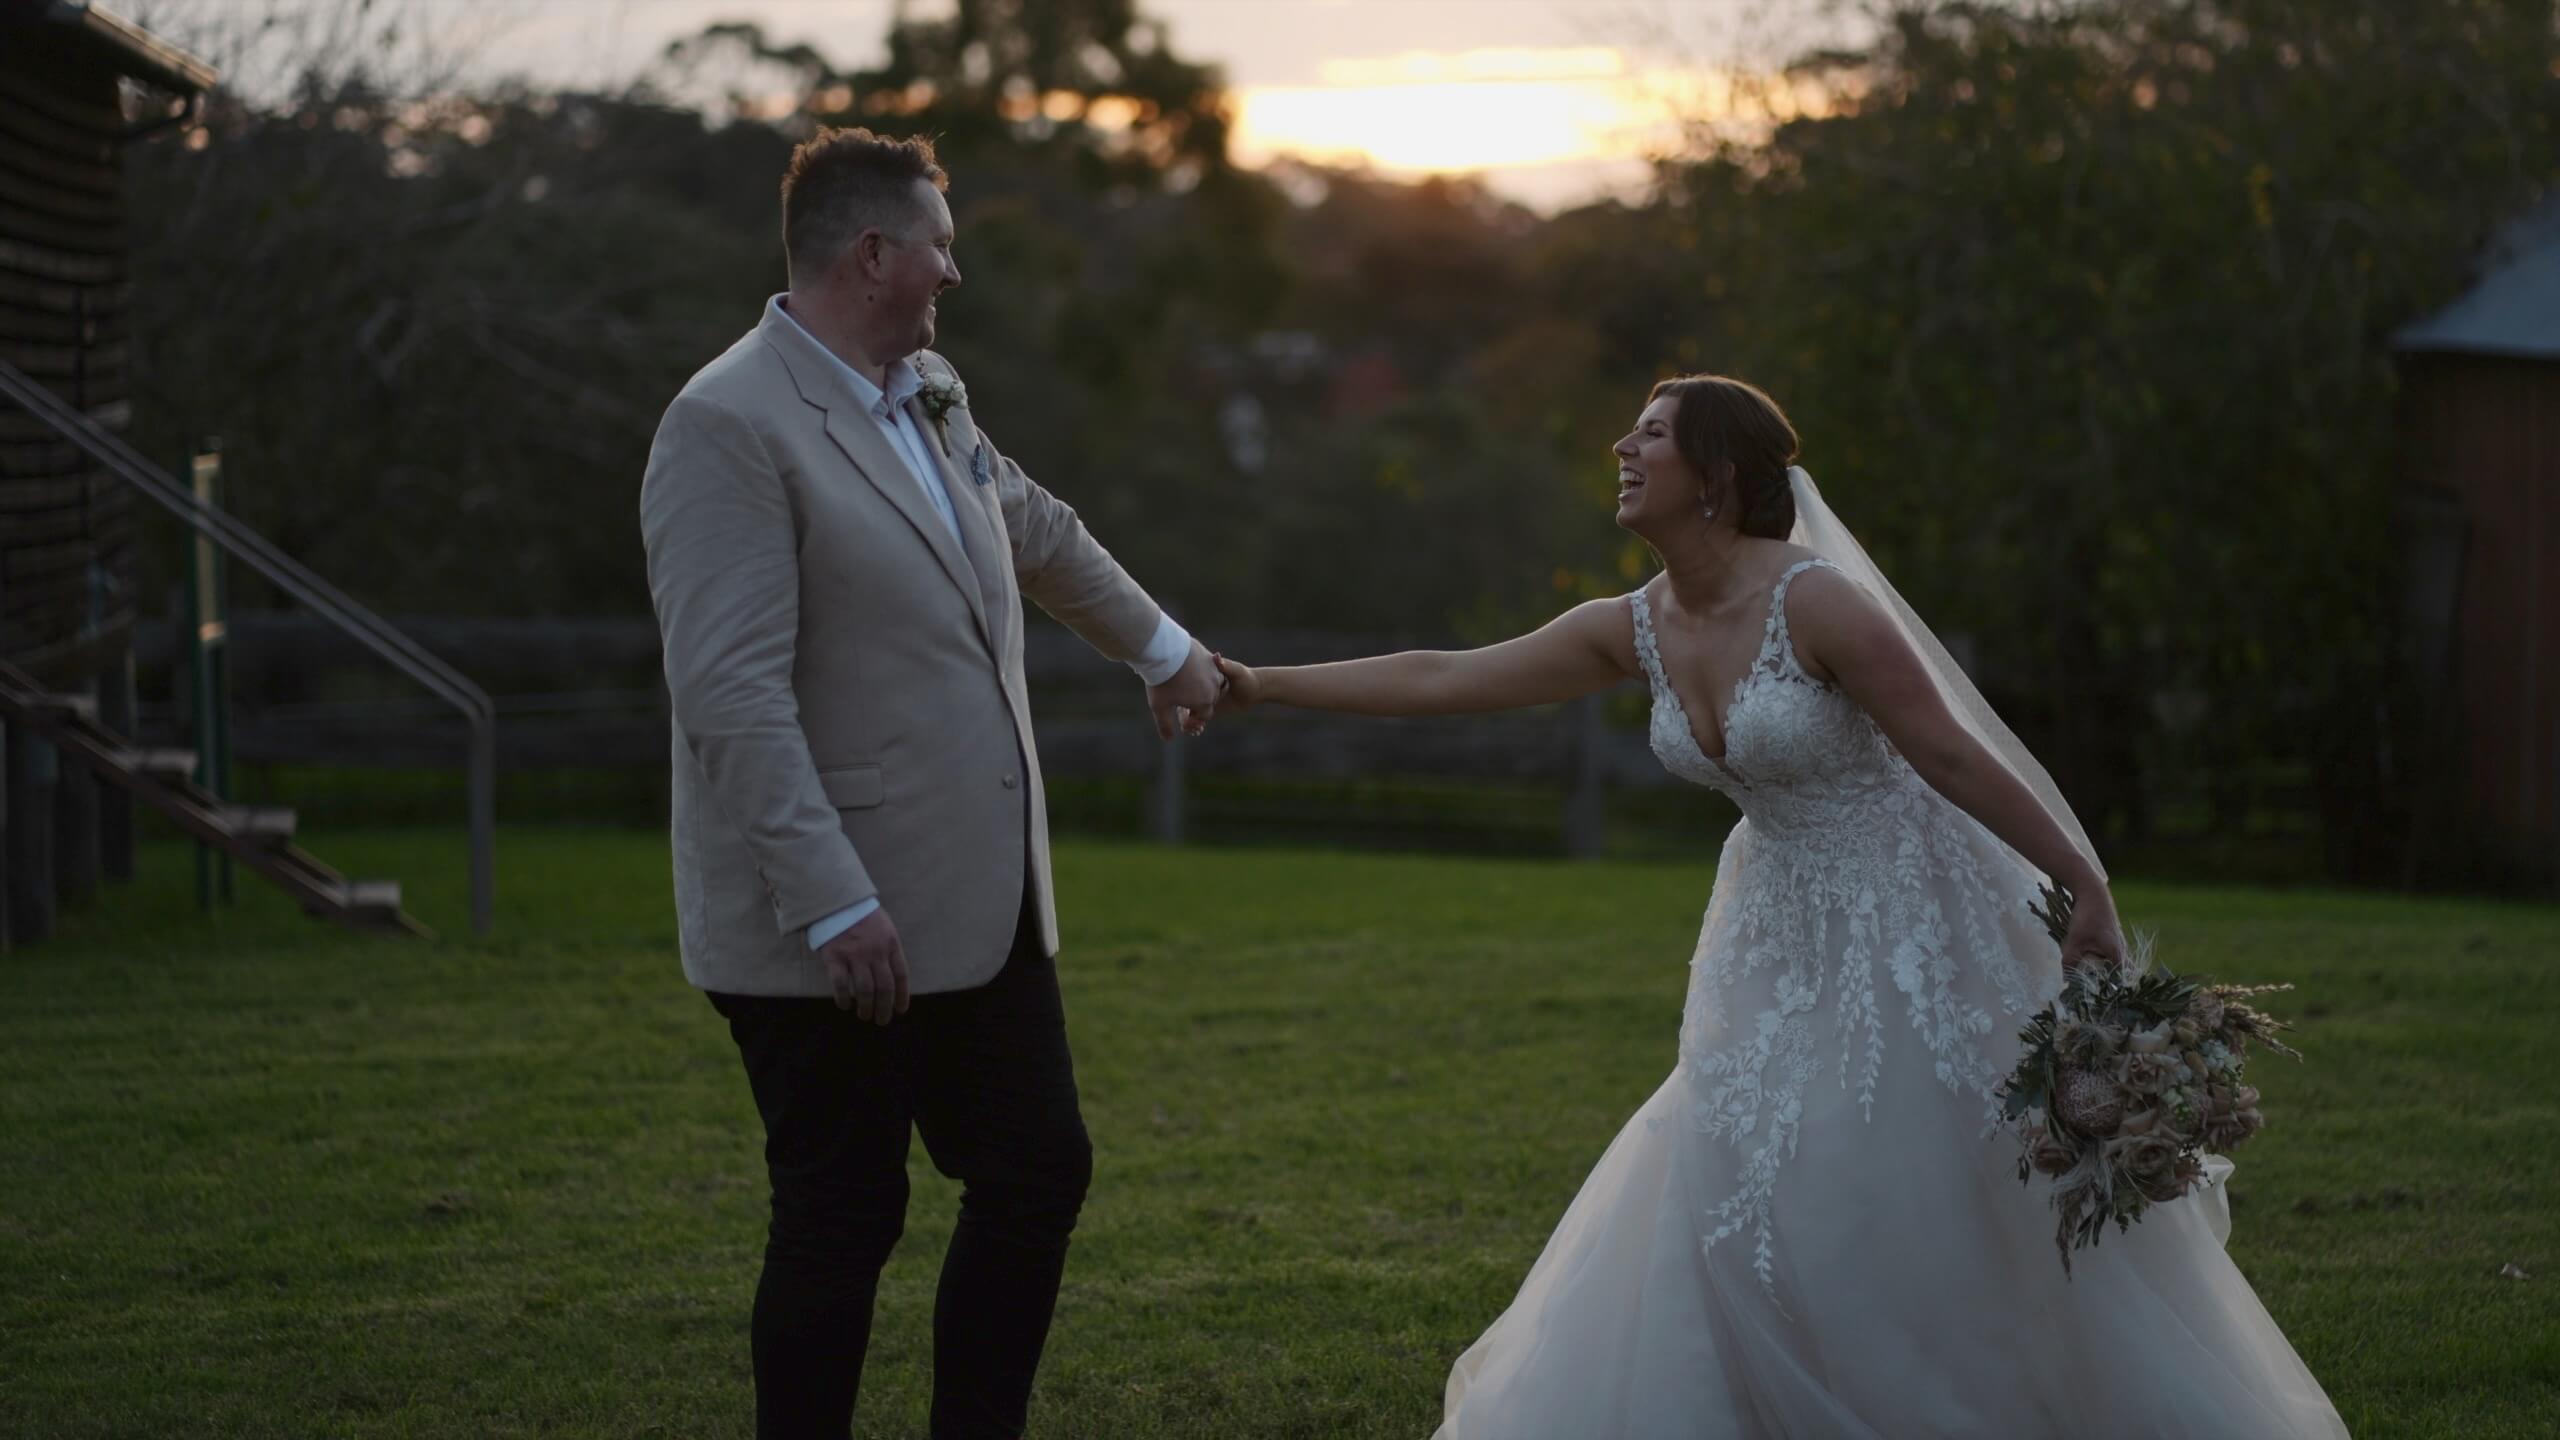 Mary + Justin Highlight Film // Belgenny Farm // Sydney Wedding Videography